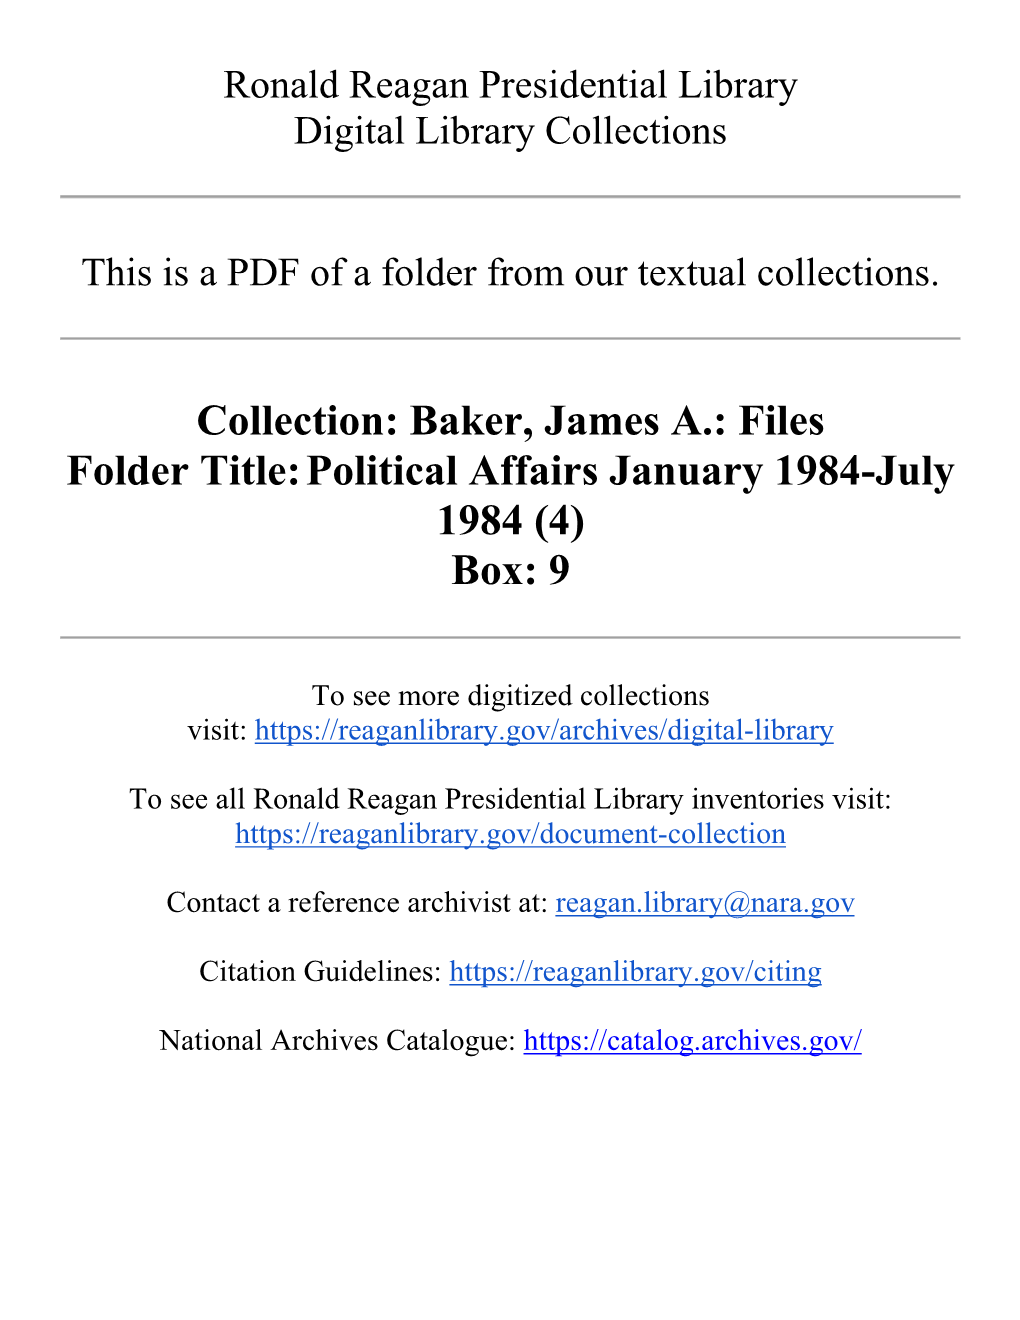 Baker, James A.: Files Folder Title: Political Affairs January 1984-July 1984 (4) Box: 9